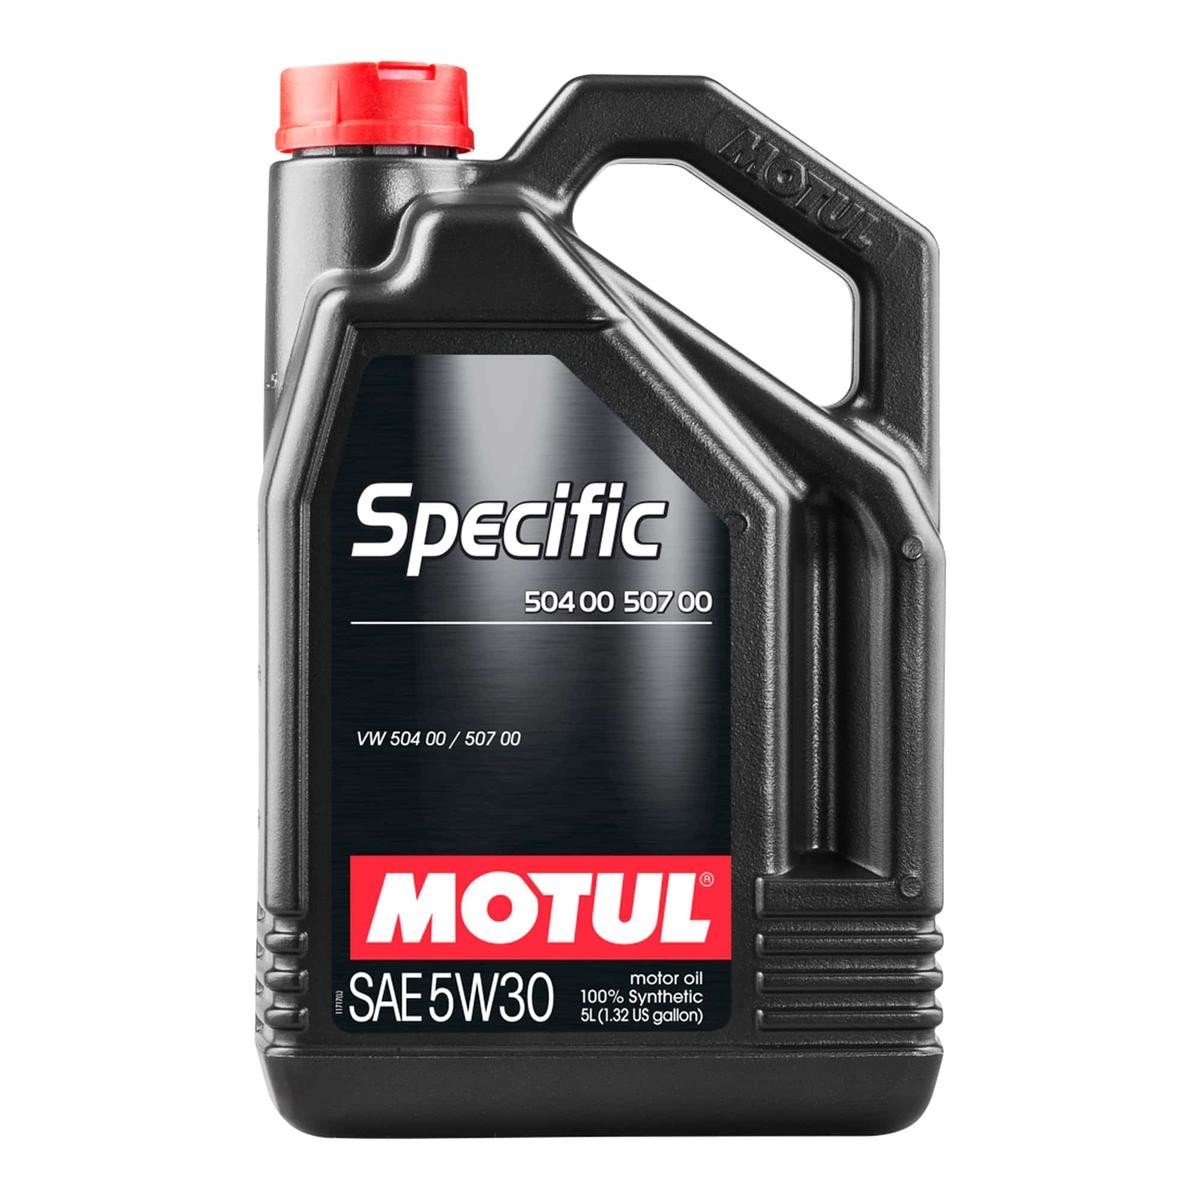 MOTUL Engine oil, Car detailing - buy original products in online 